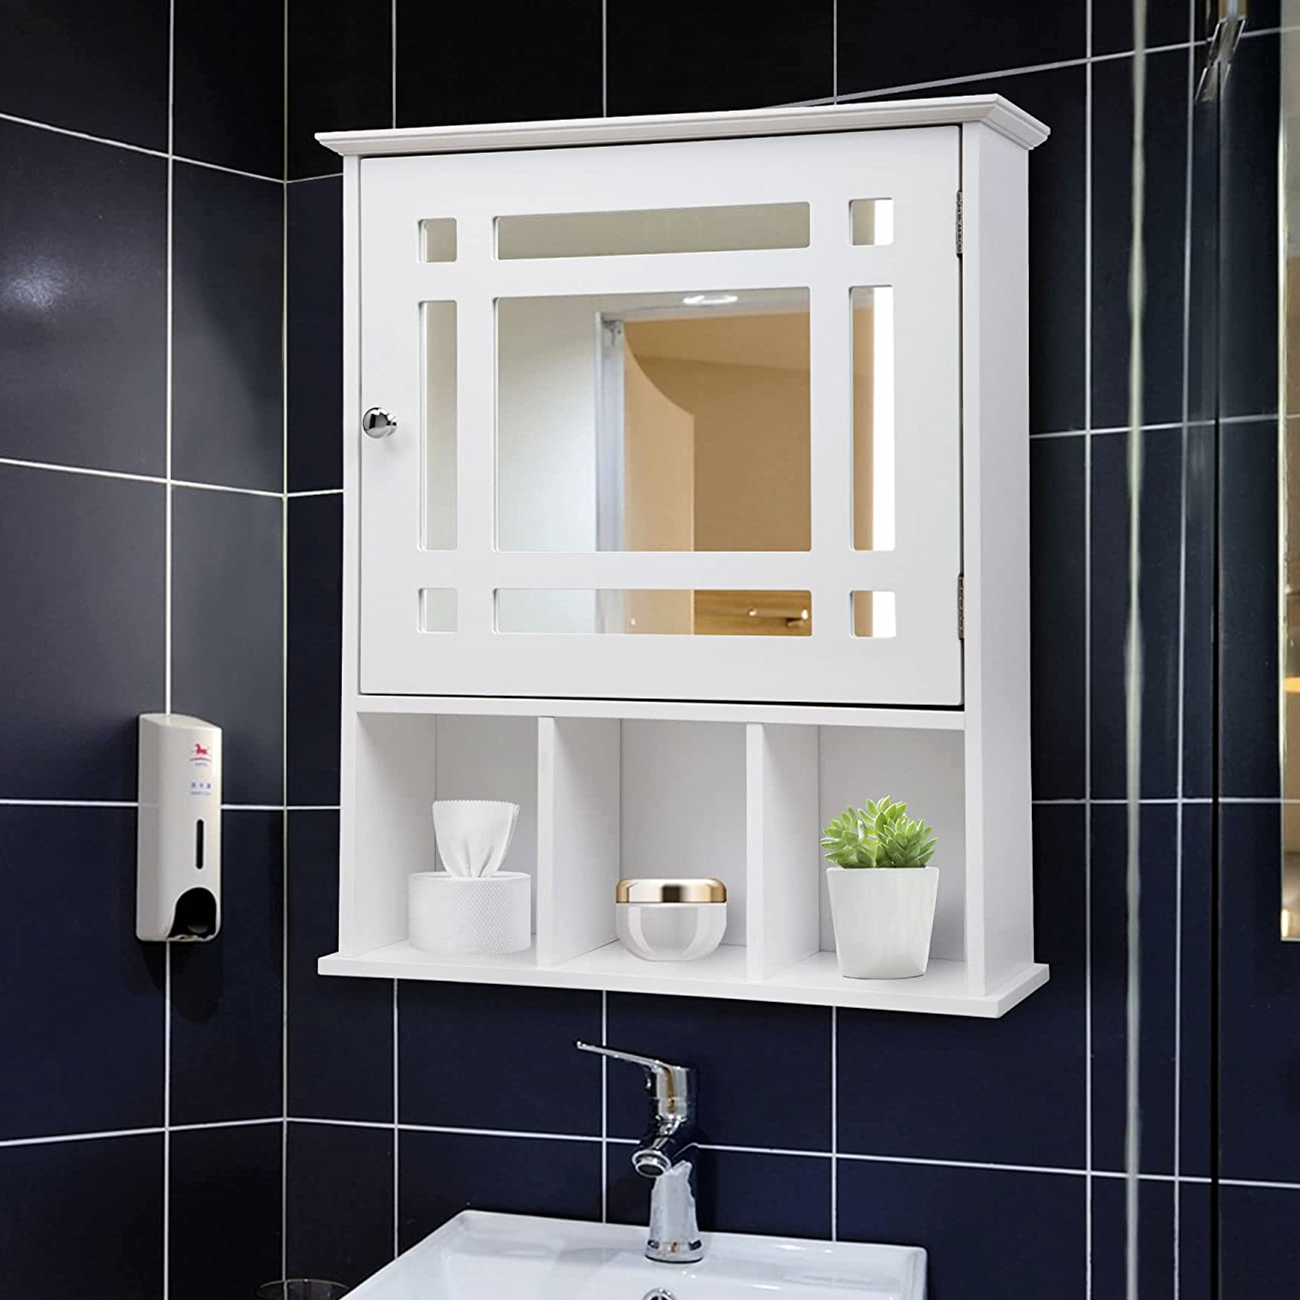 UBesGoo Wall Mount Mirror Medicine Cabinet Bathroom Cabinet, Over the Toilet Storage Cabinet Organizer Space Saver, White - image 4 of 15